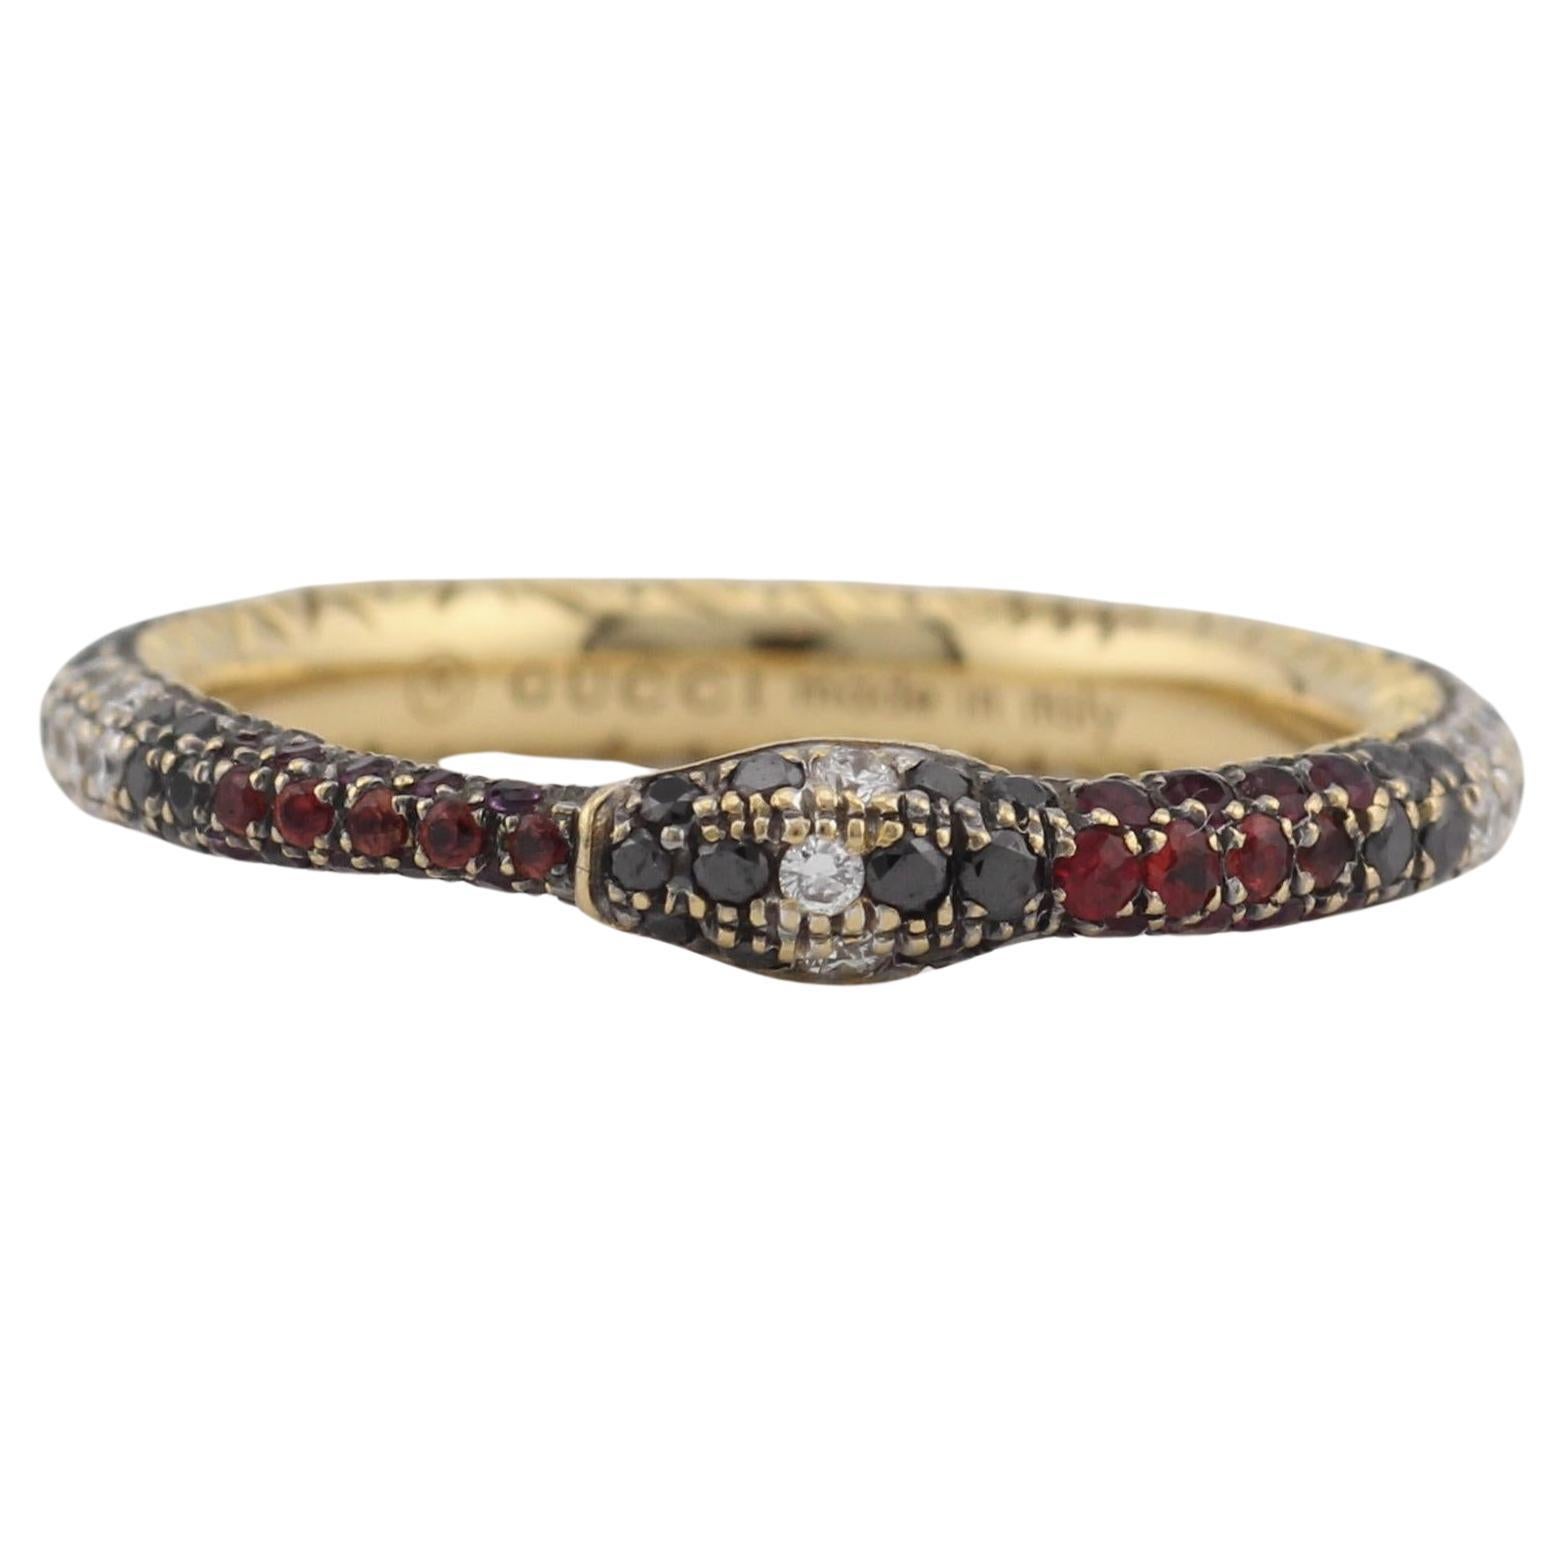 Gucci Ouroboros Edelstein 18K Gelbgold Kingsnake Band Ring Größe 5 im Angebot